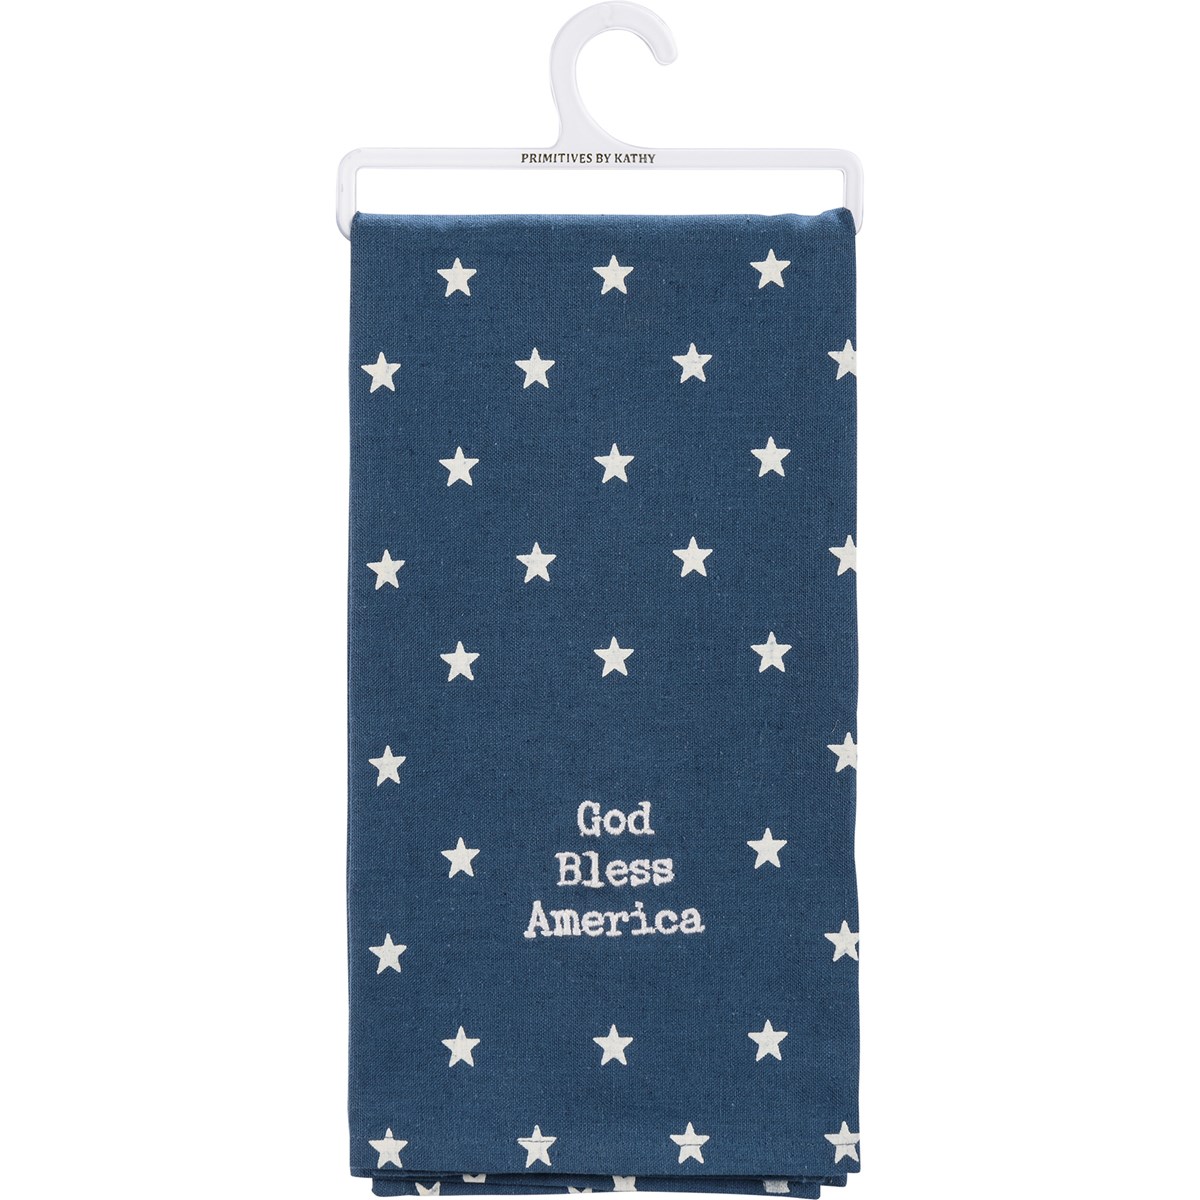 God Bless America Kitchen Towel - Cotton, Linen